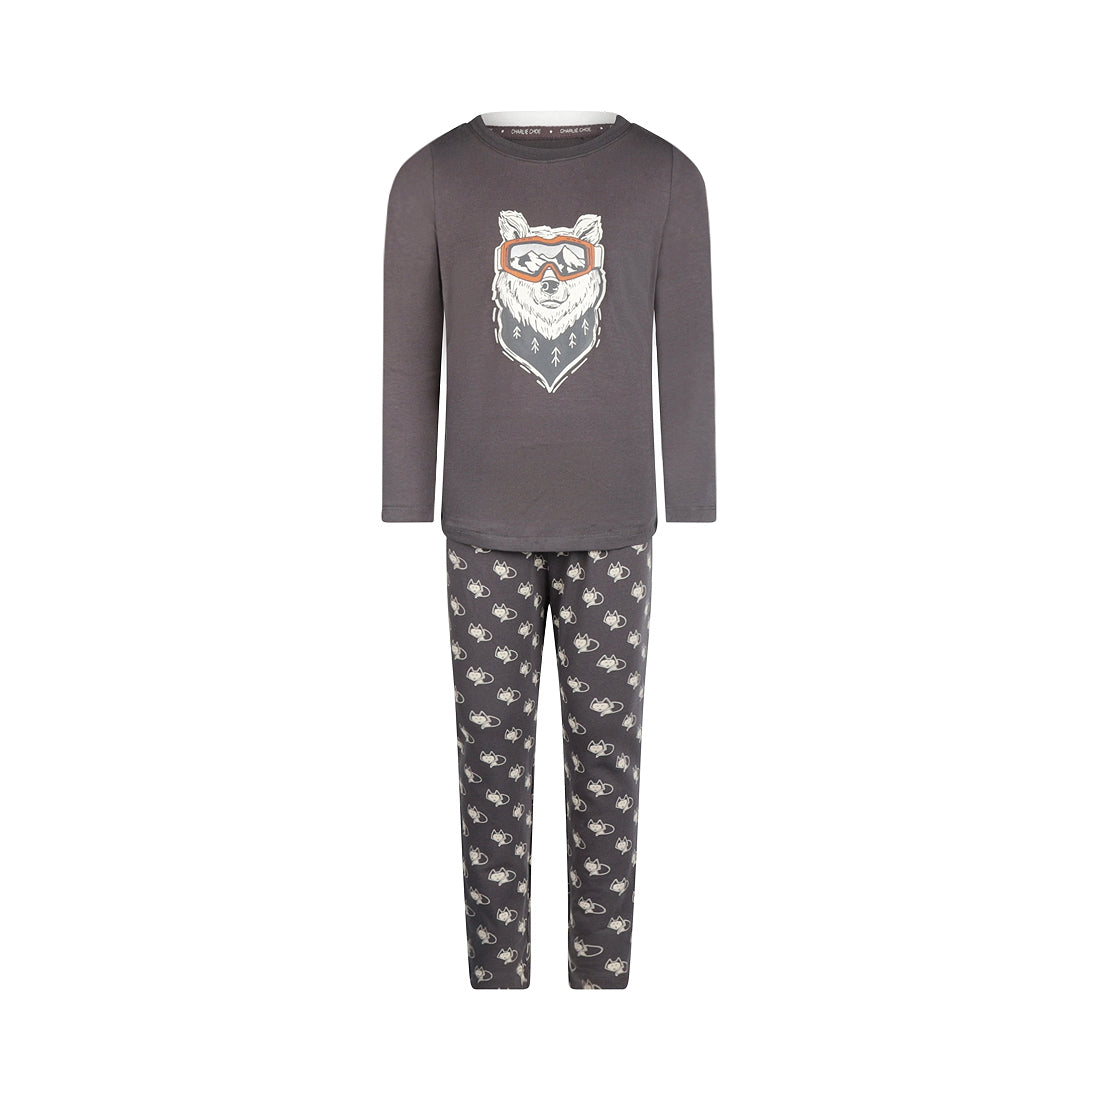 Boys pyjama set S49051-42 D97 Dark grey